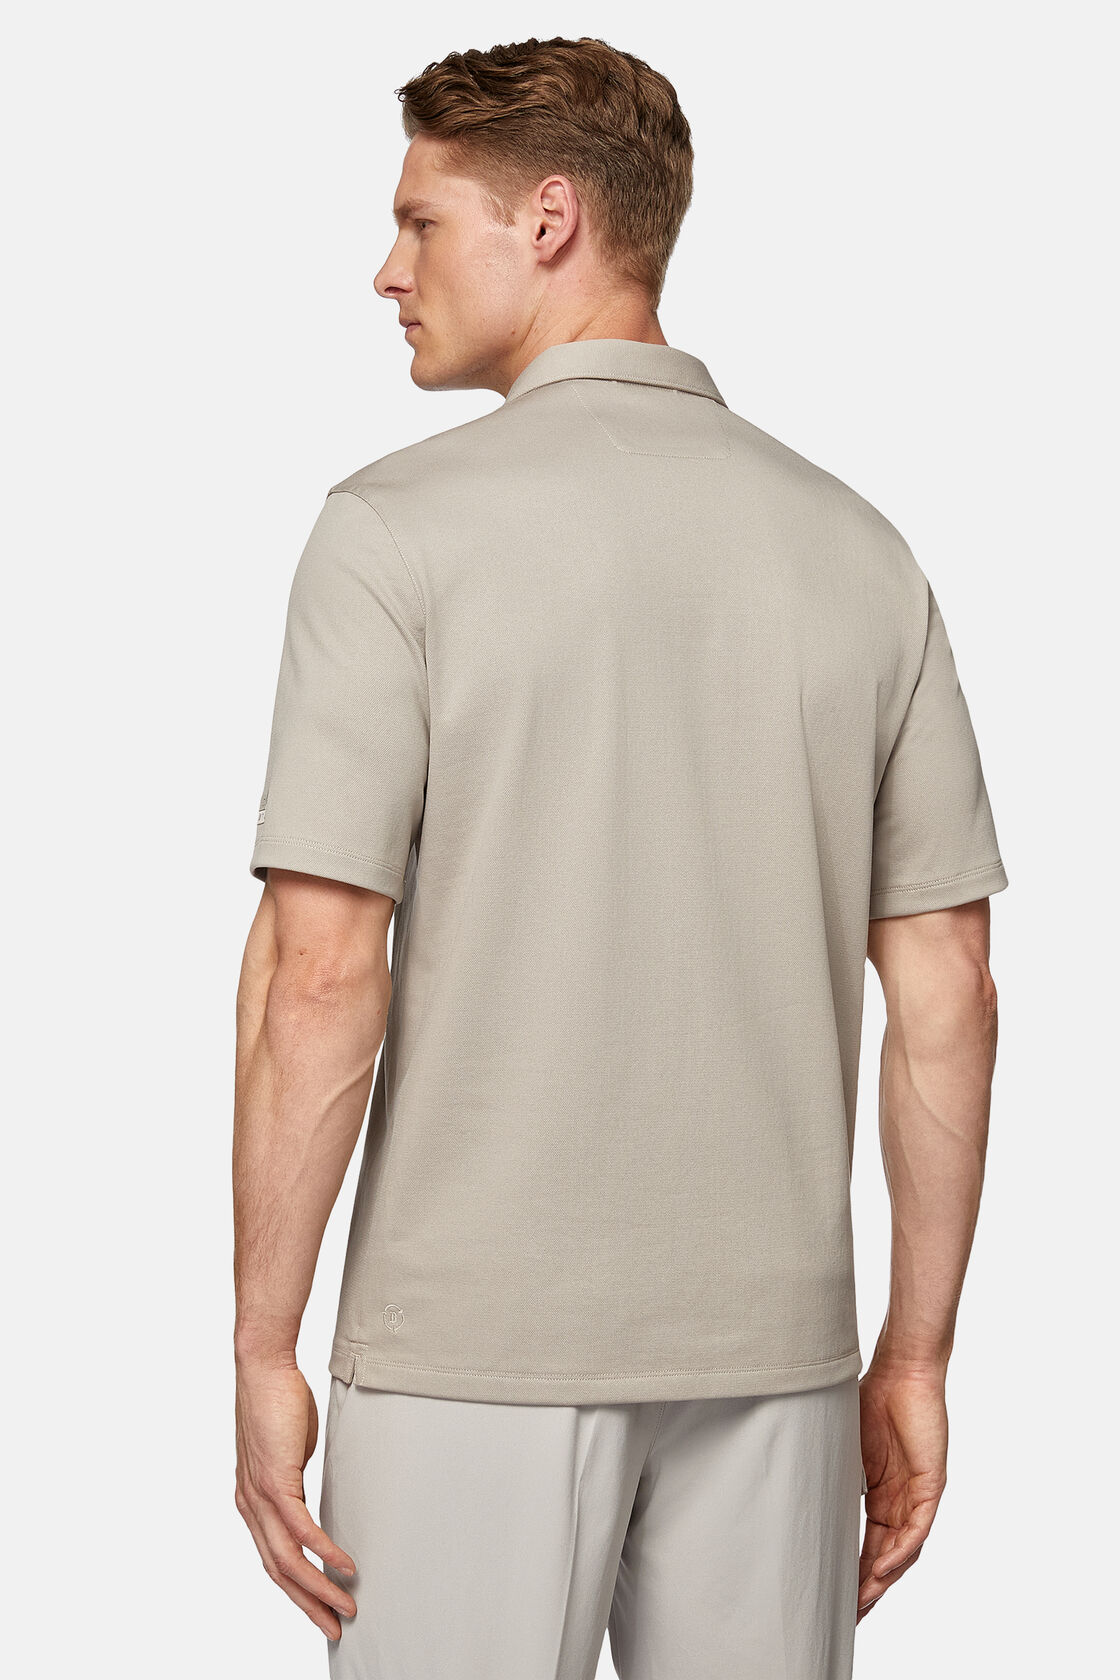 Hochwertiges Piqué-Poloshirt, Sand, hi-res